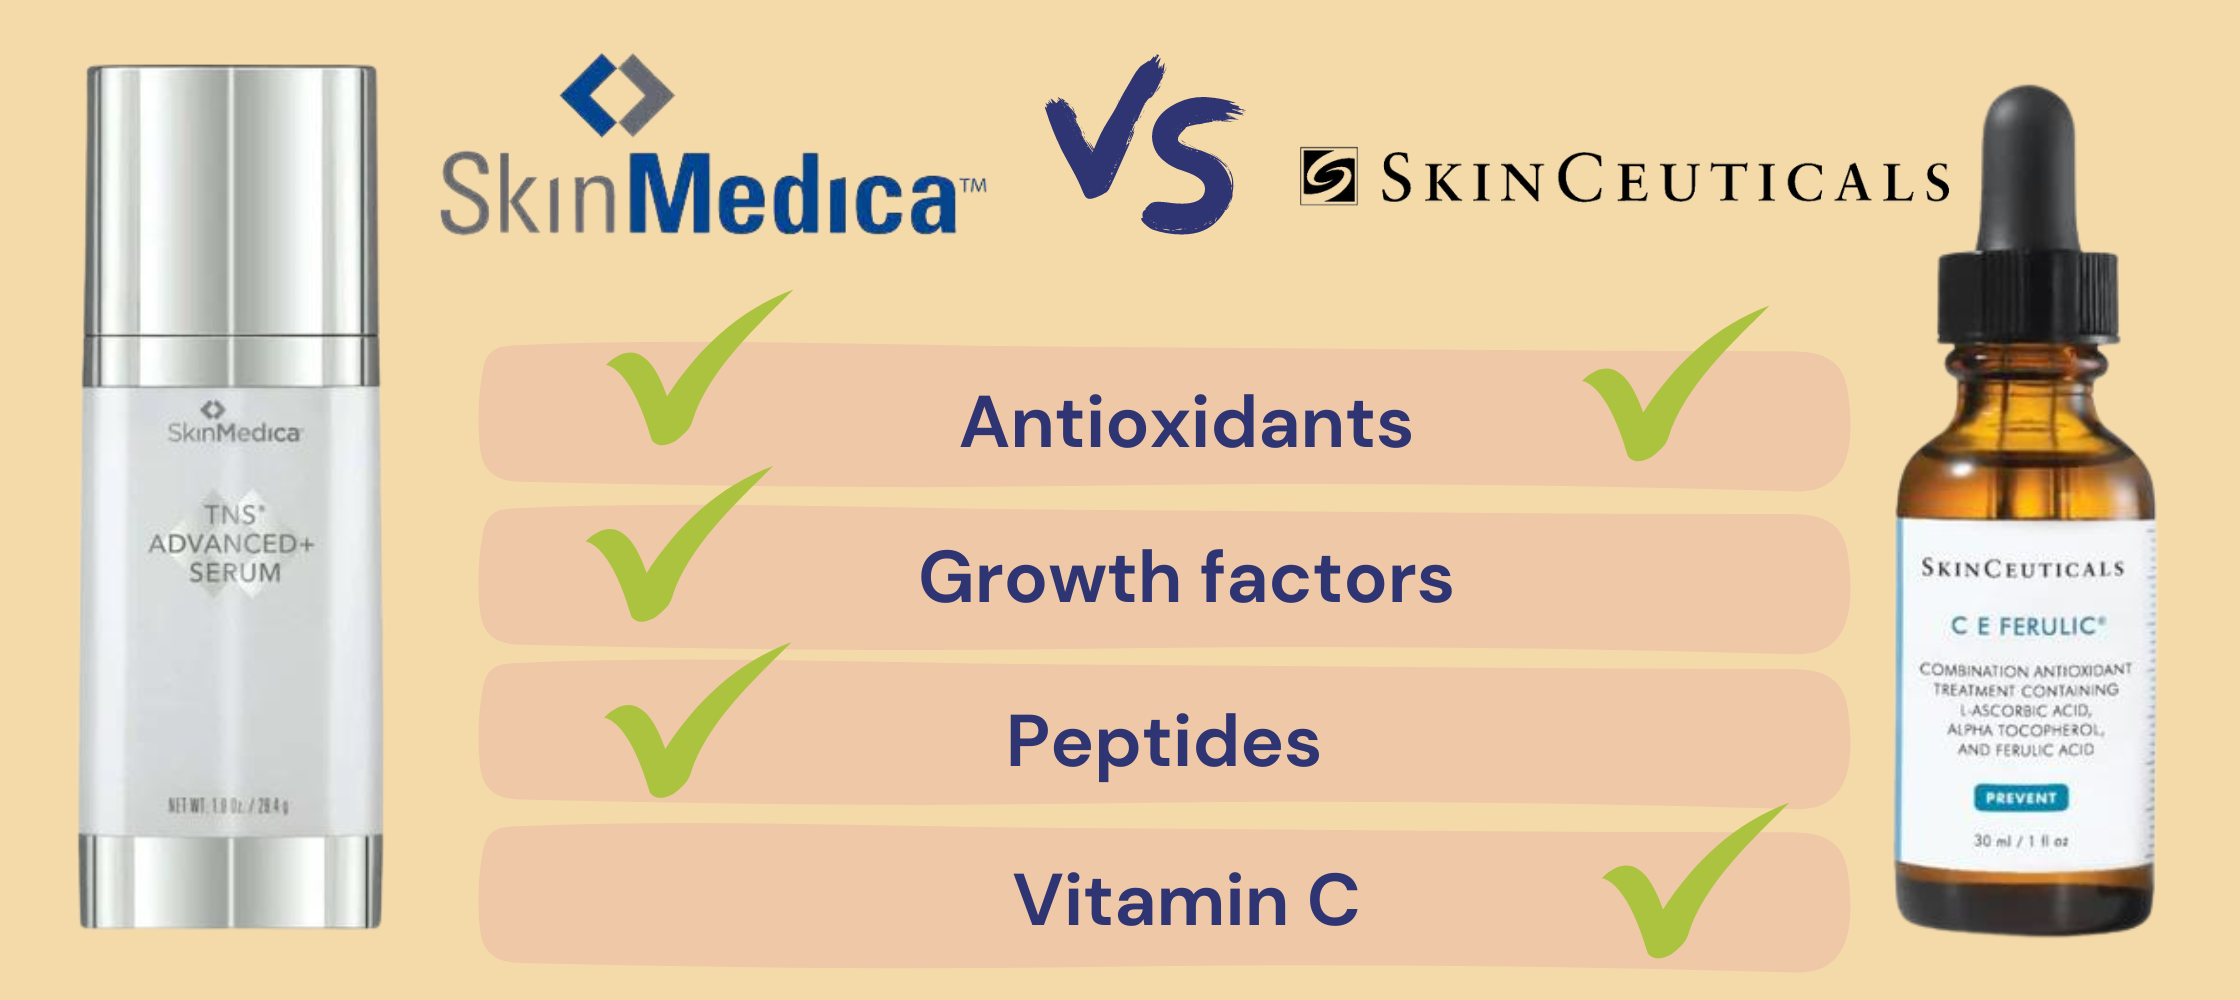 Ingredients in Skinmedica TNS Serum vs Skinceuticals CE Ferulic